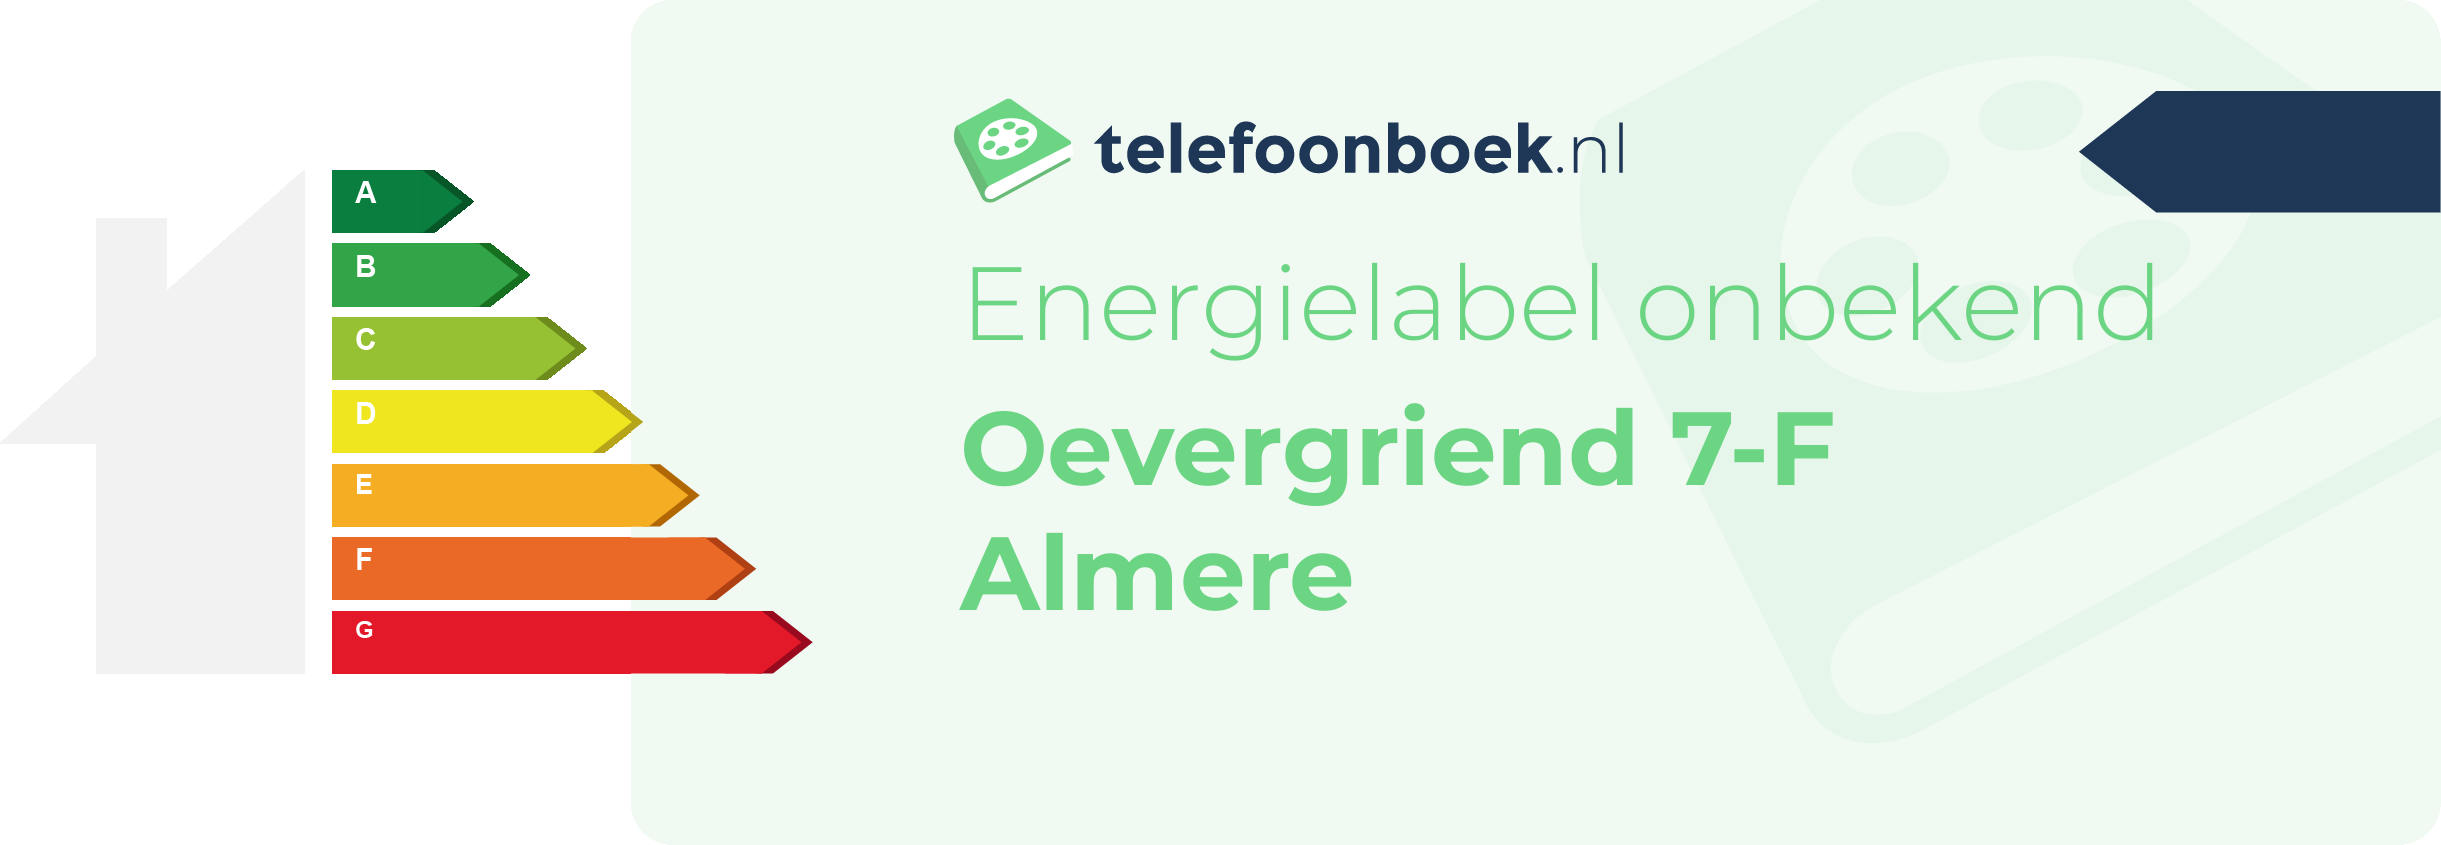 Energielabel Oevergriend 7-F Almere